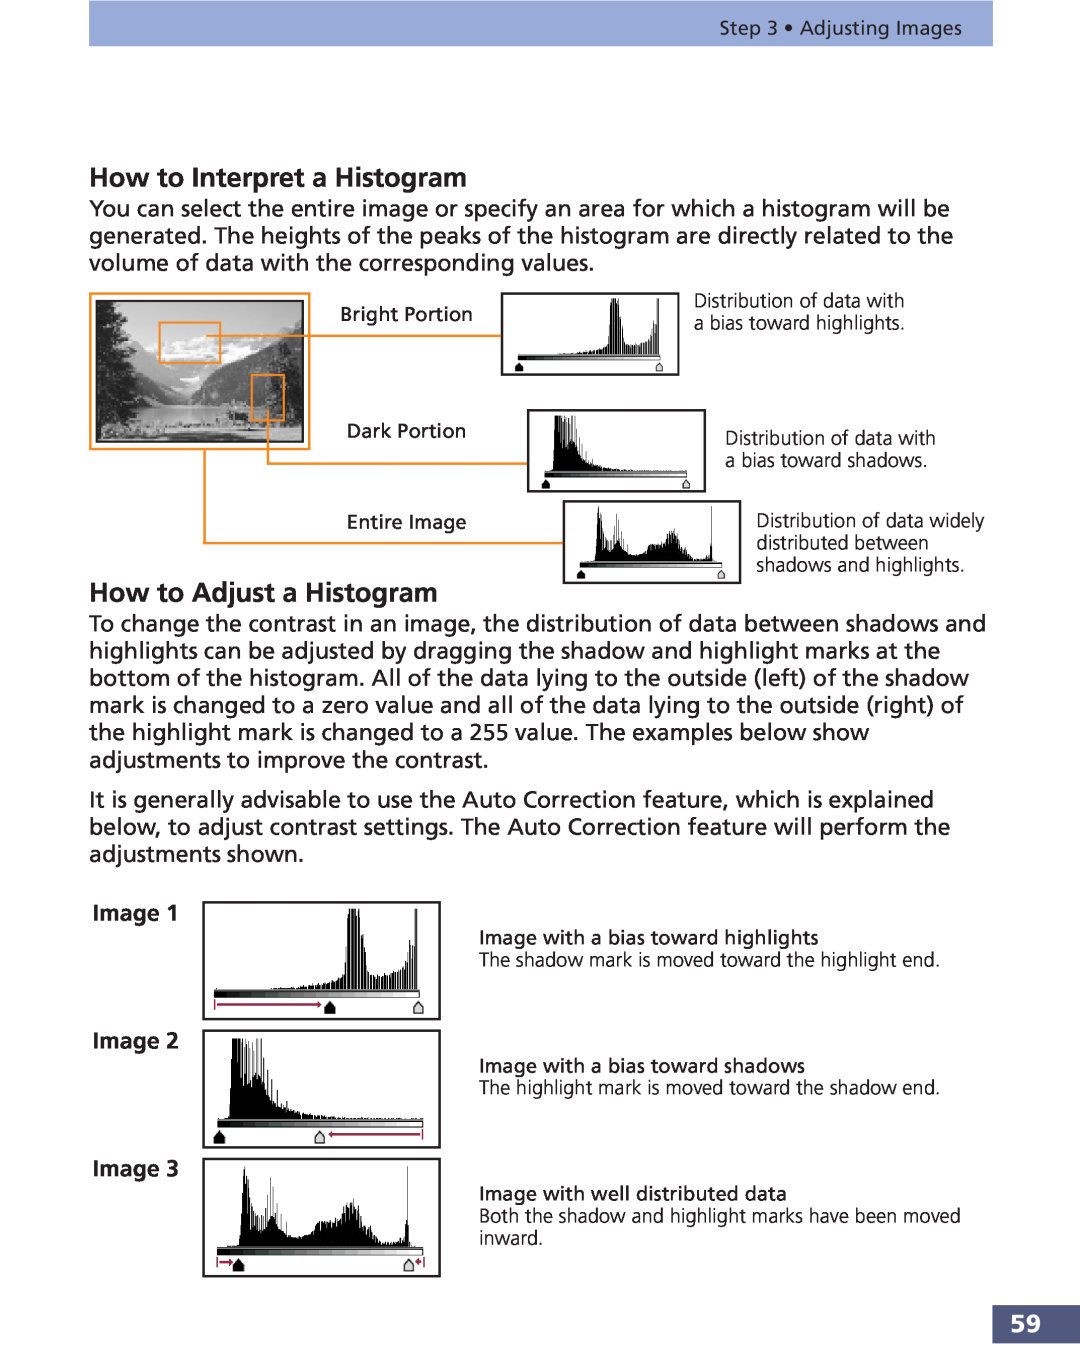 Canon FS 3.6 manual How to Interpret a Histogram, How to Adjust a Histogram, Image Image Image 